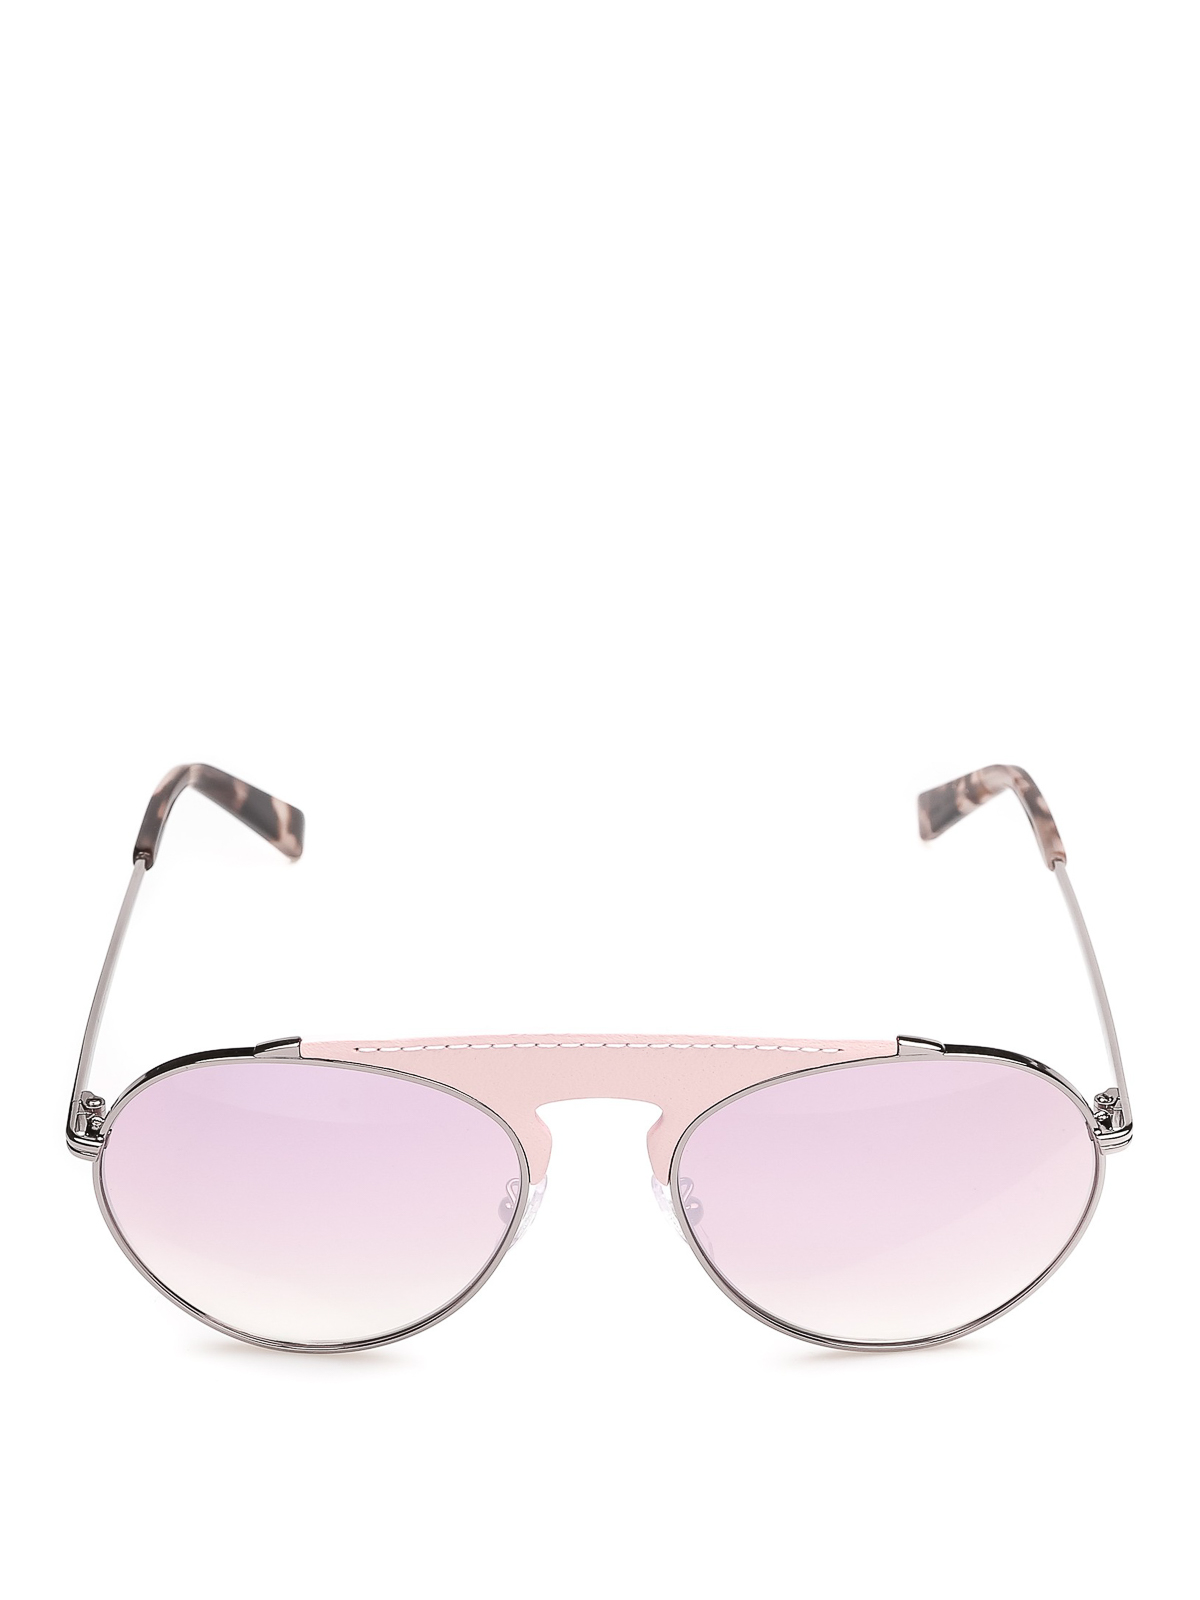 loewe sunglasses pink